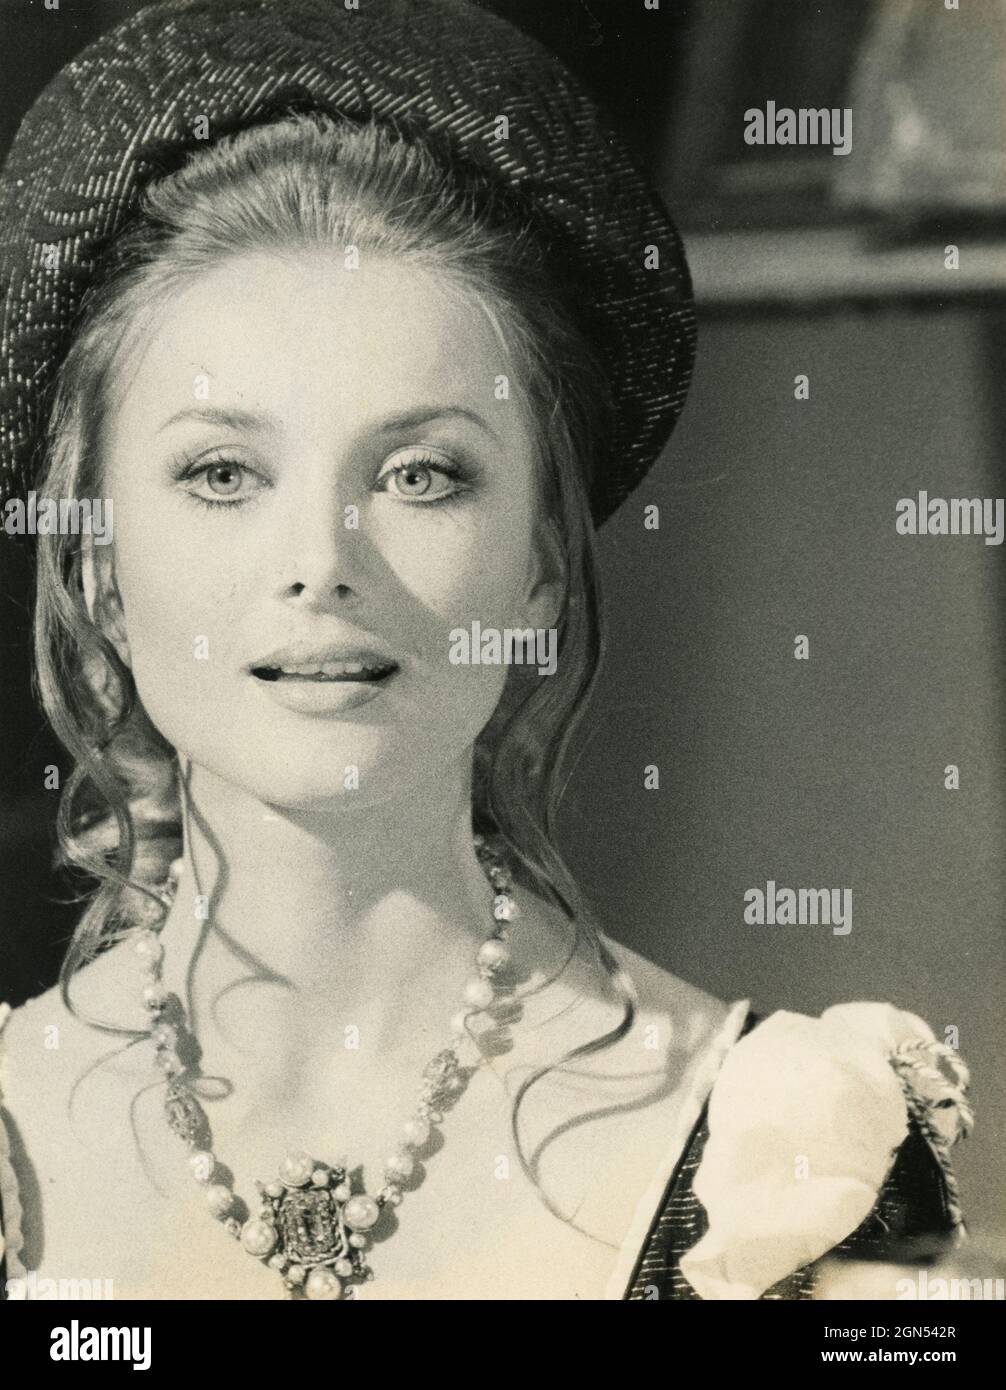 German-American actress Barbara Bouchet, 1970s Stock Photo